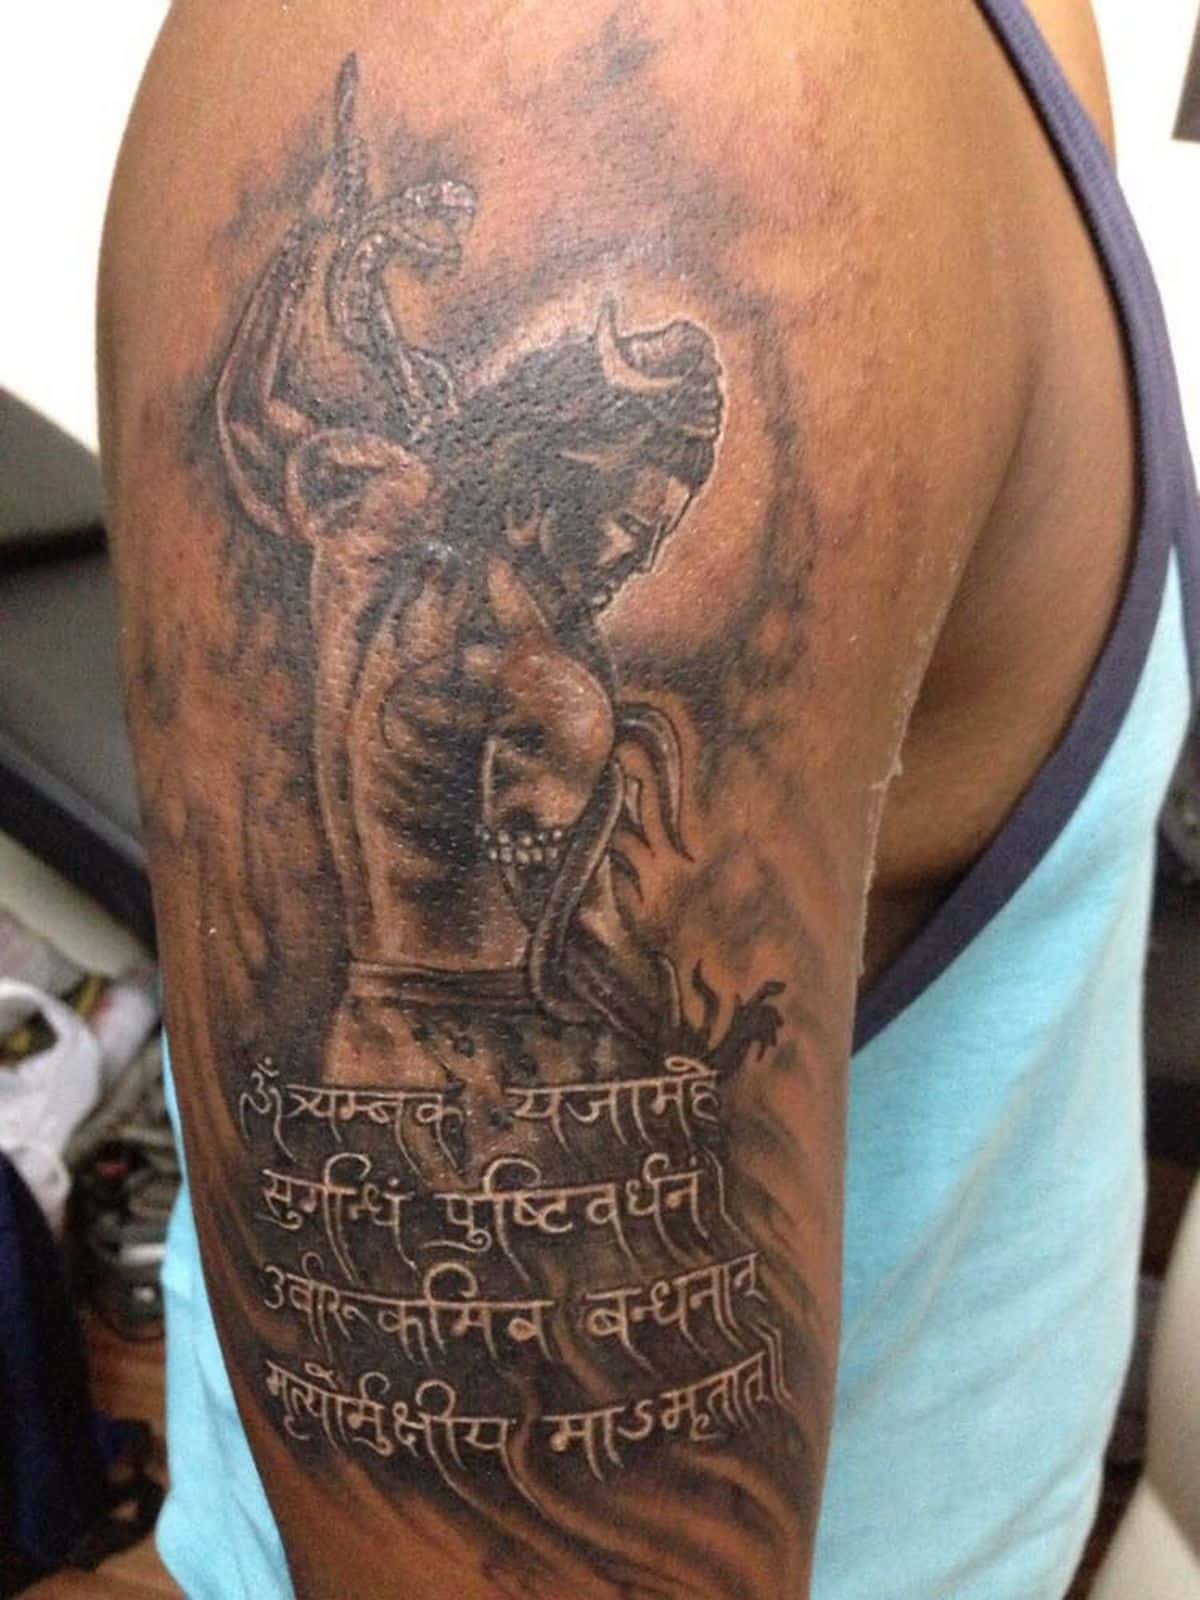 Mahadev tattoo |Mahadev tattoo design |Shiva tattoo |Shivji tattoo  |Bholenath tattoo | Band tattoo designs, Forearm band tattoos, Trishul  tattoo designs